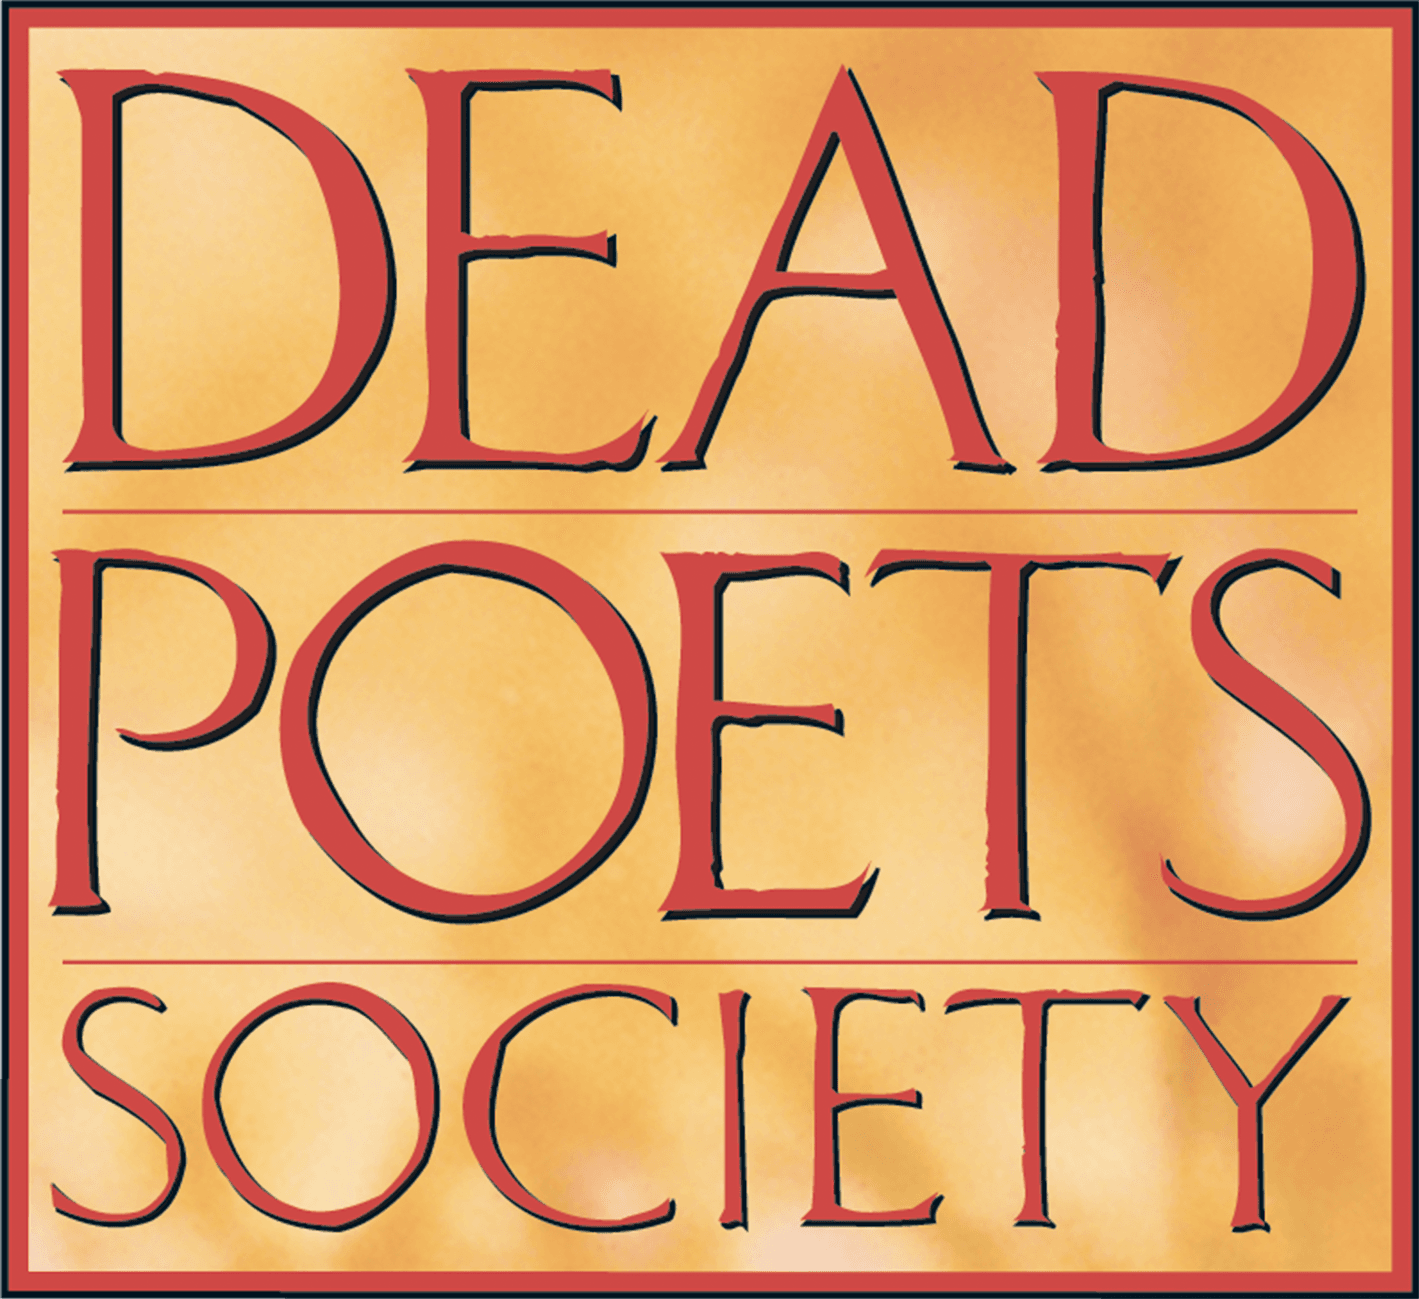 Dead Poets Society logo